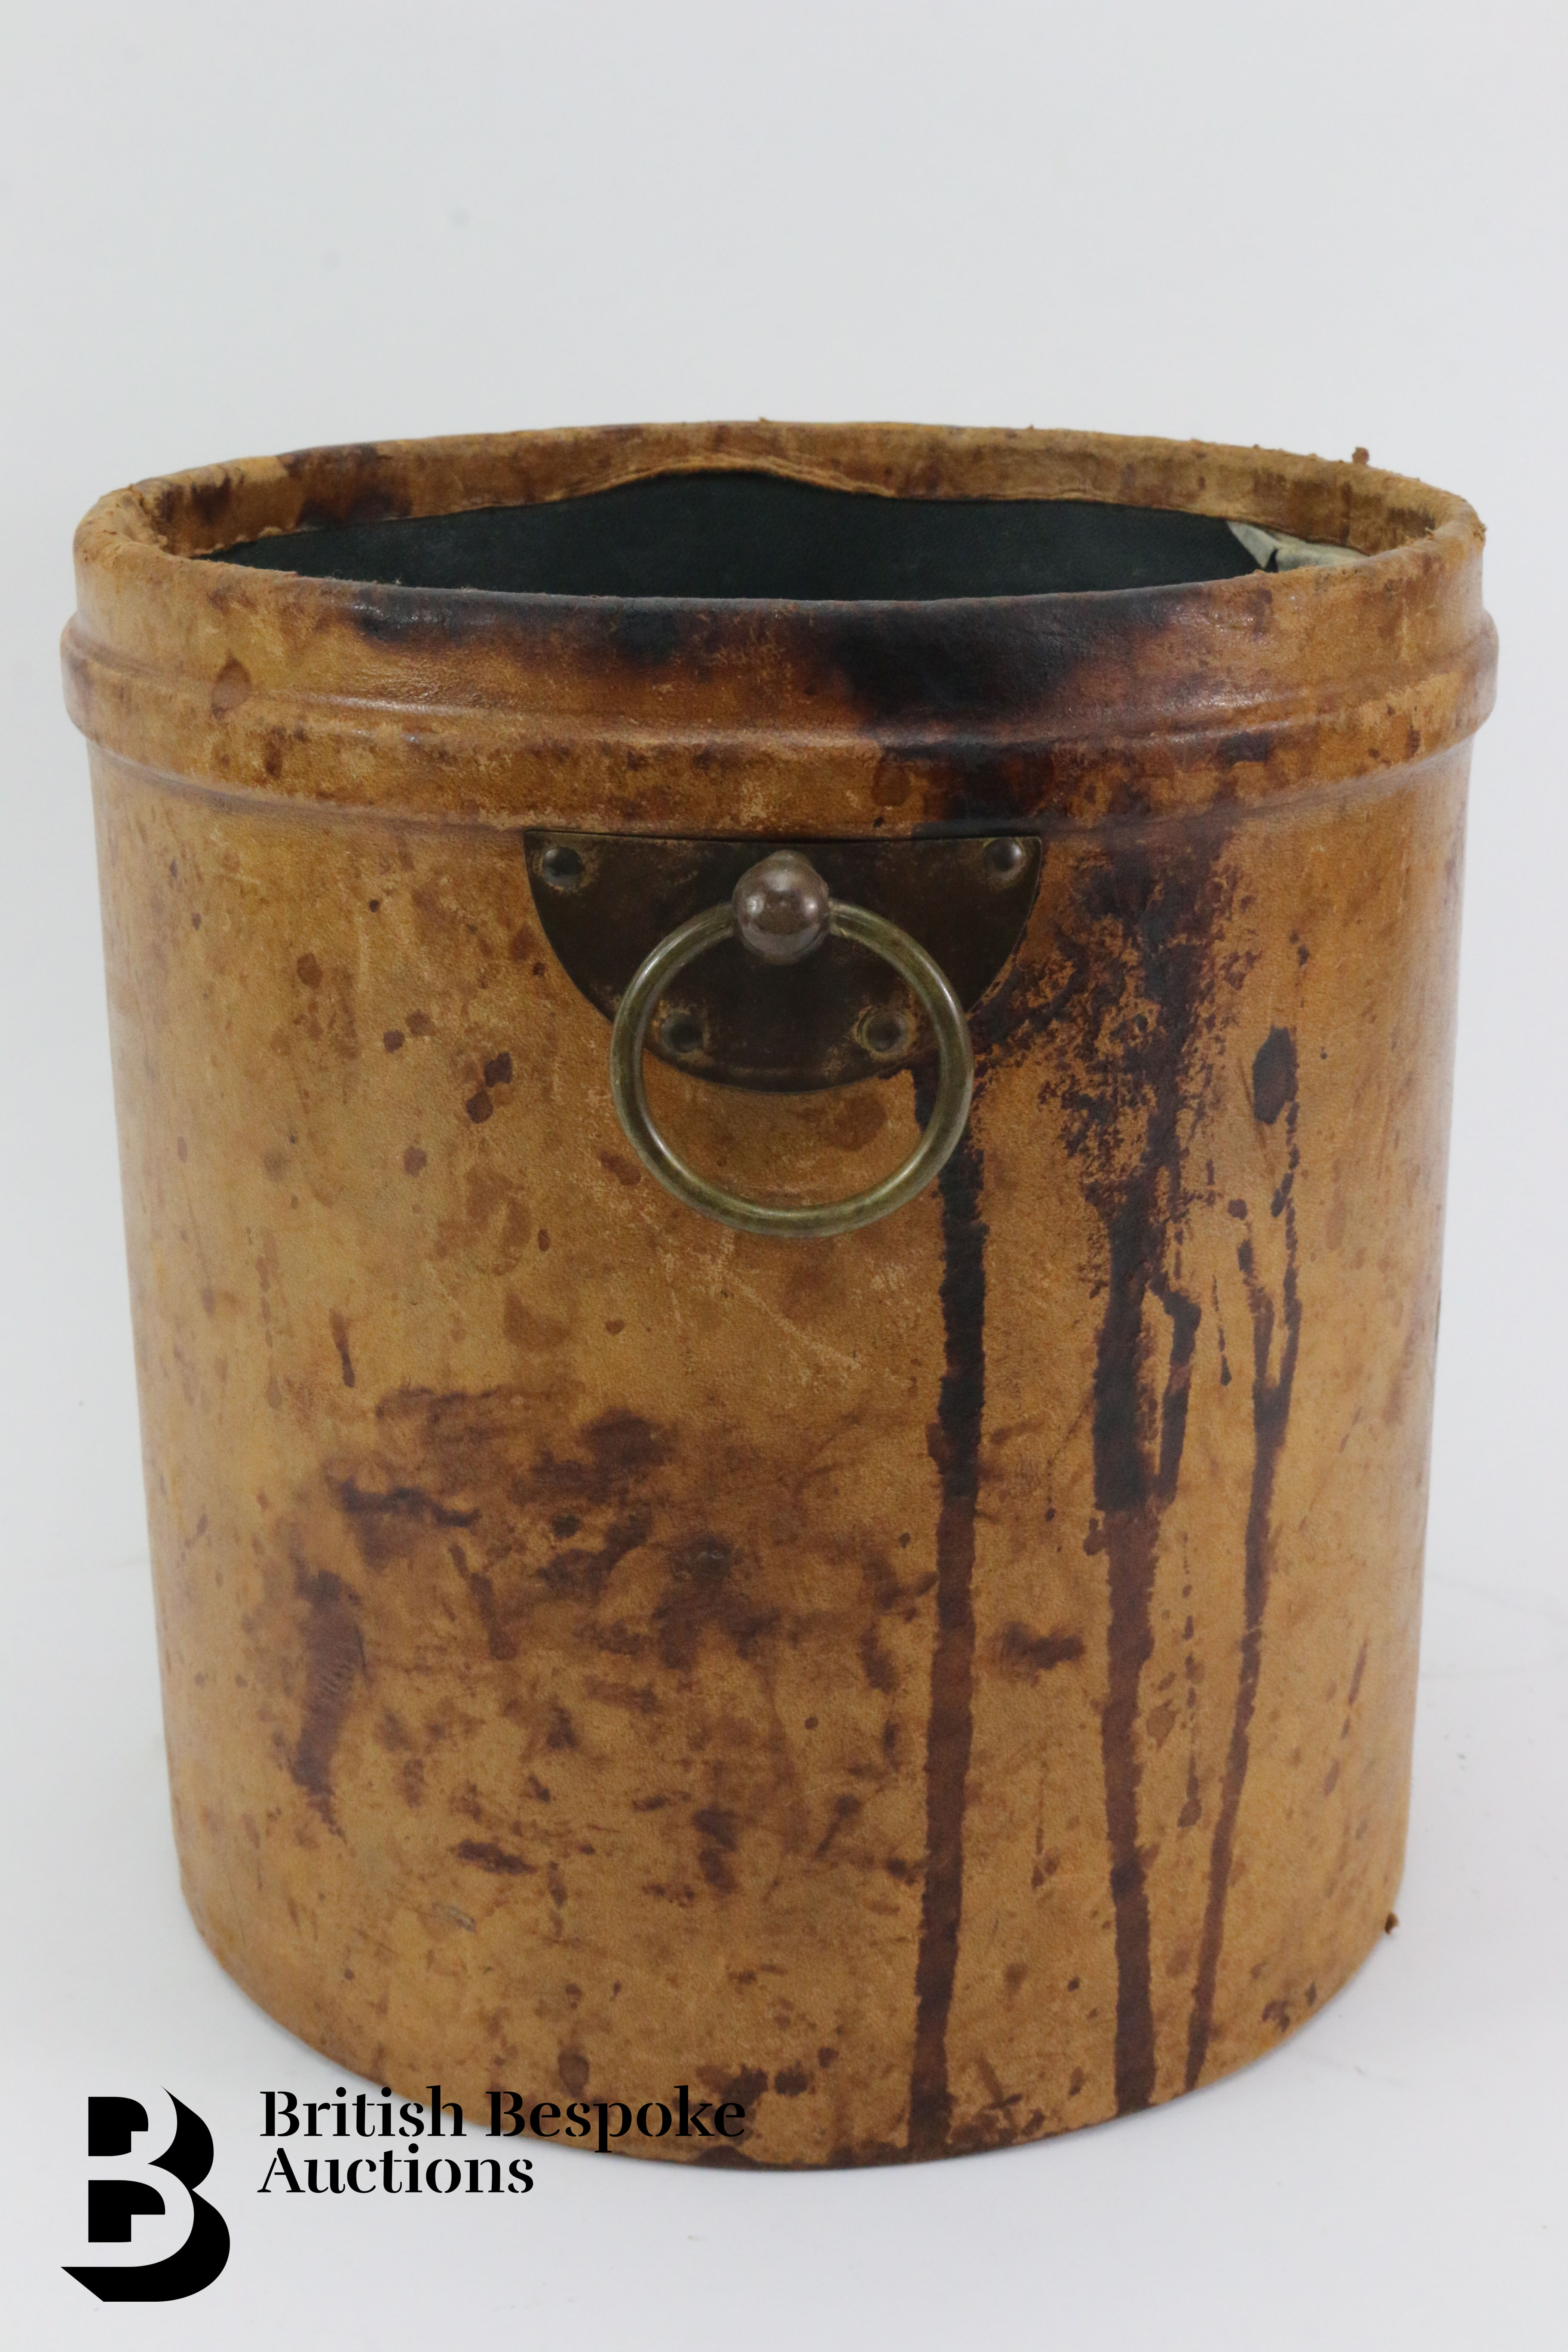 Leather Clad Bucket - Image 4 of 7